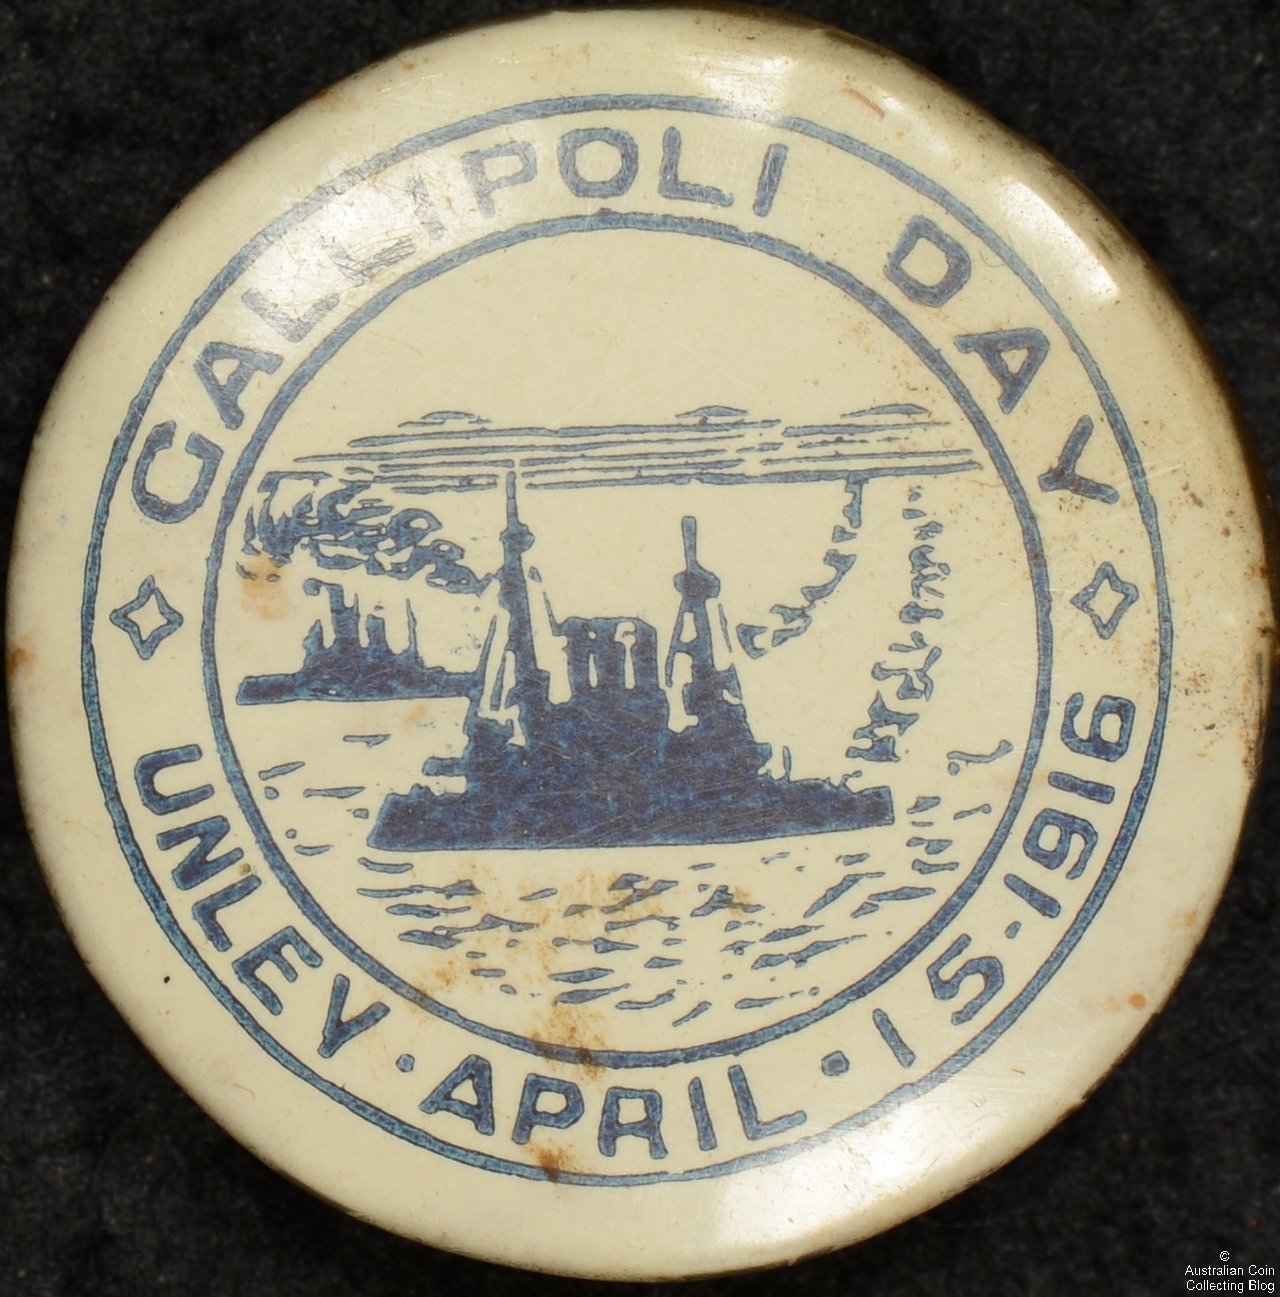 Gallipoli Day Unley April 15 1916 Tin Badge